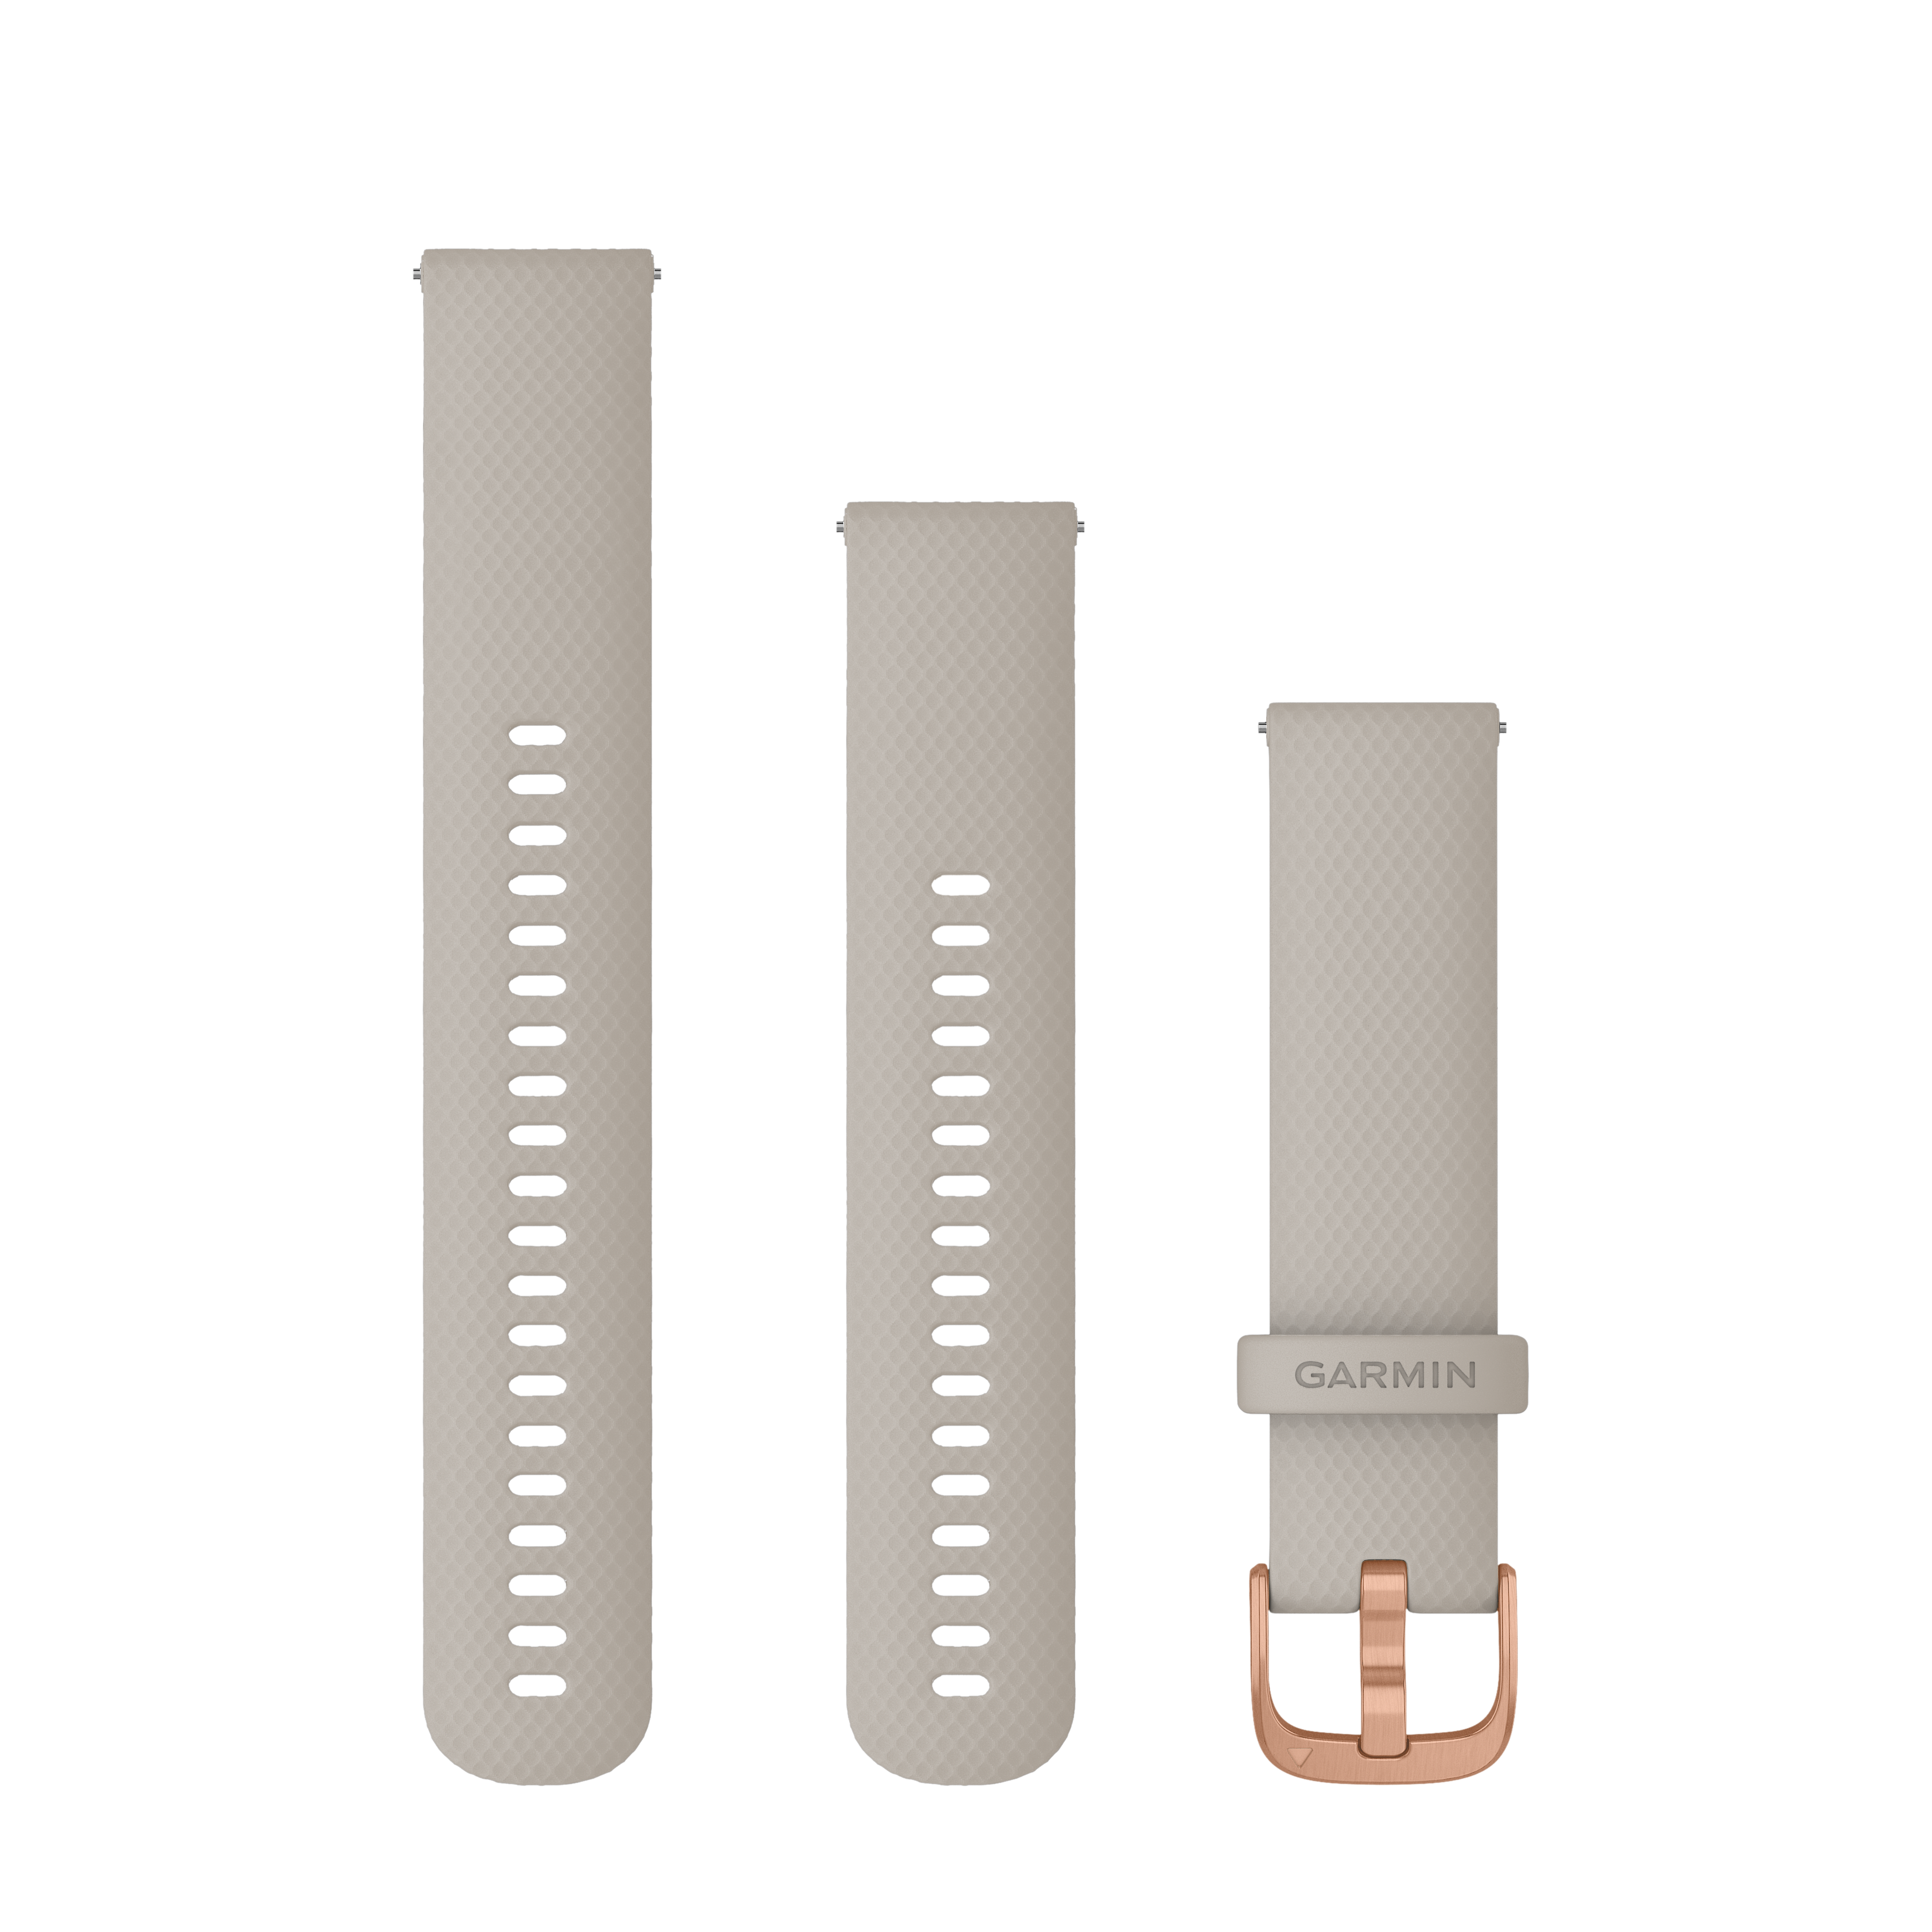 Garmin Quick Release strap, light true silicone with rose gold tone hardware